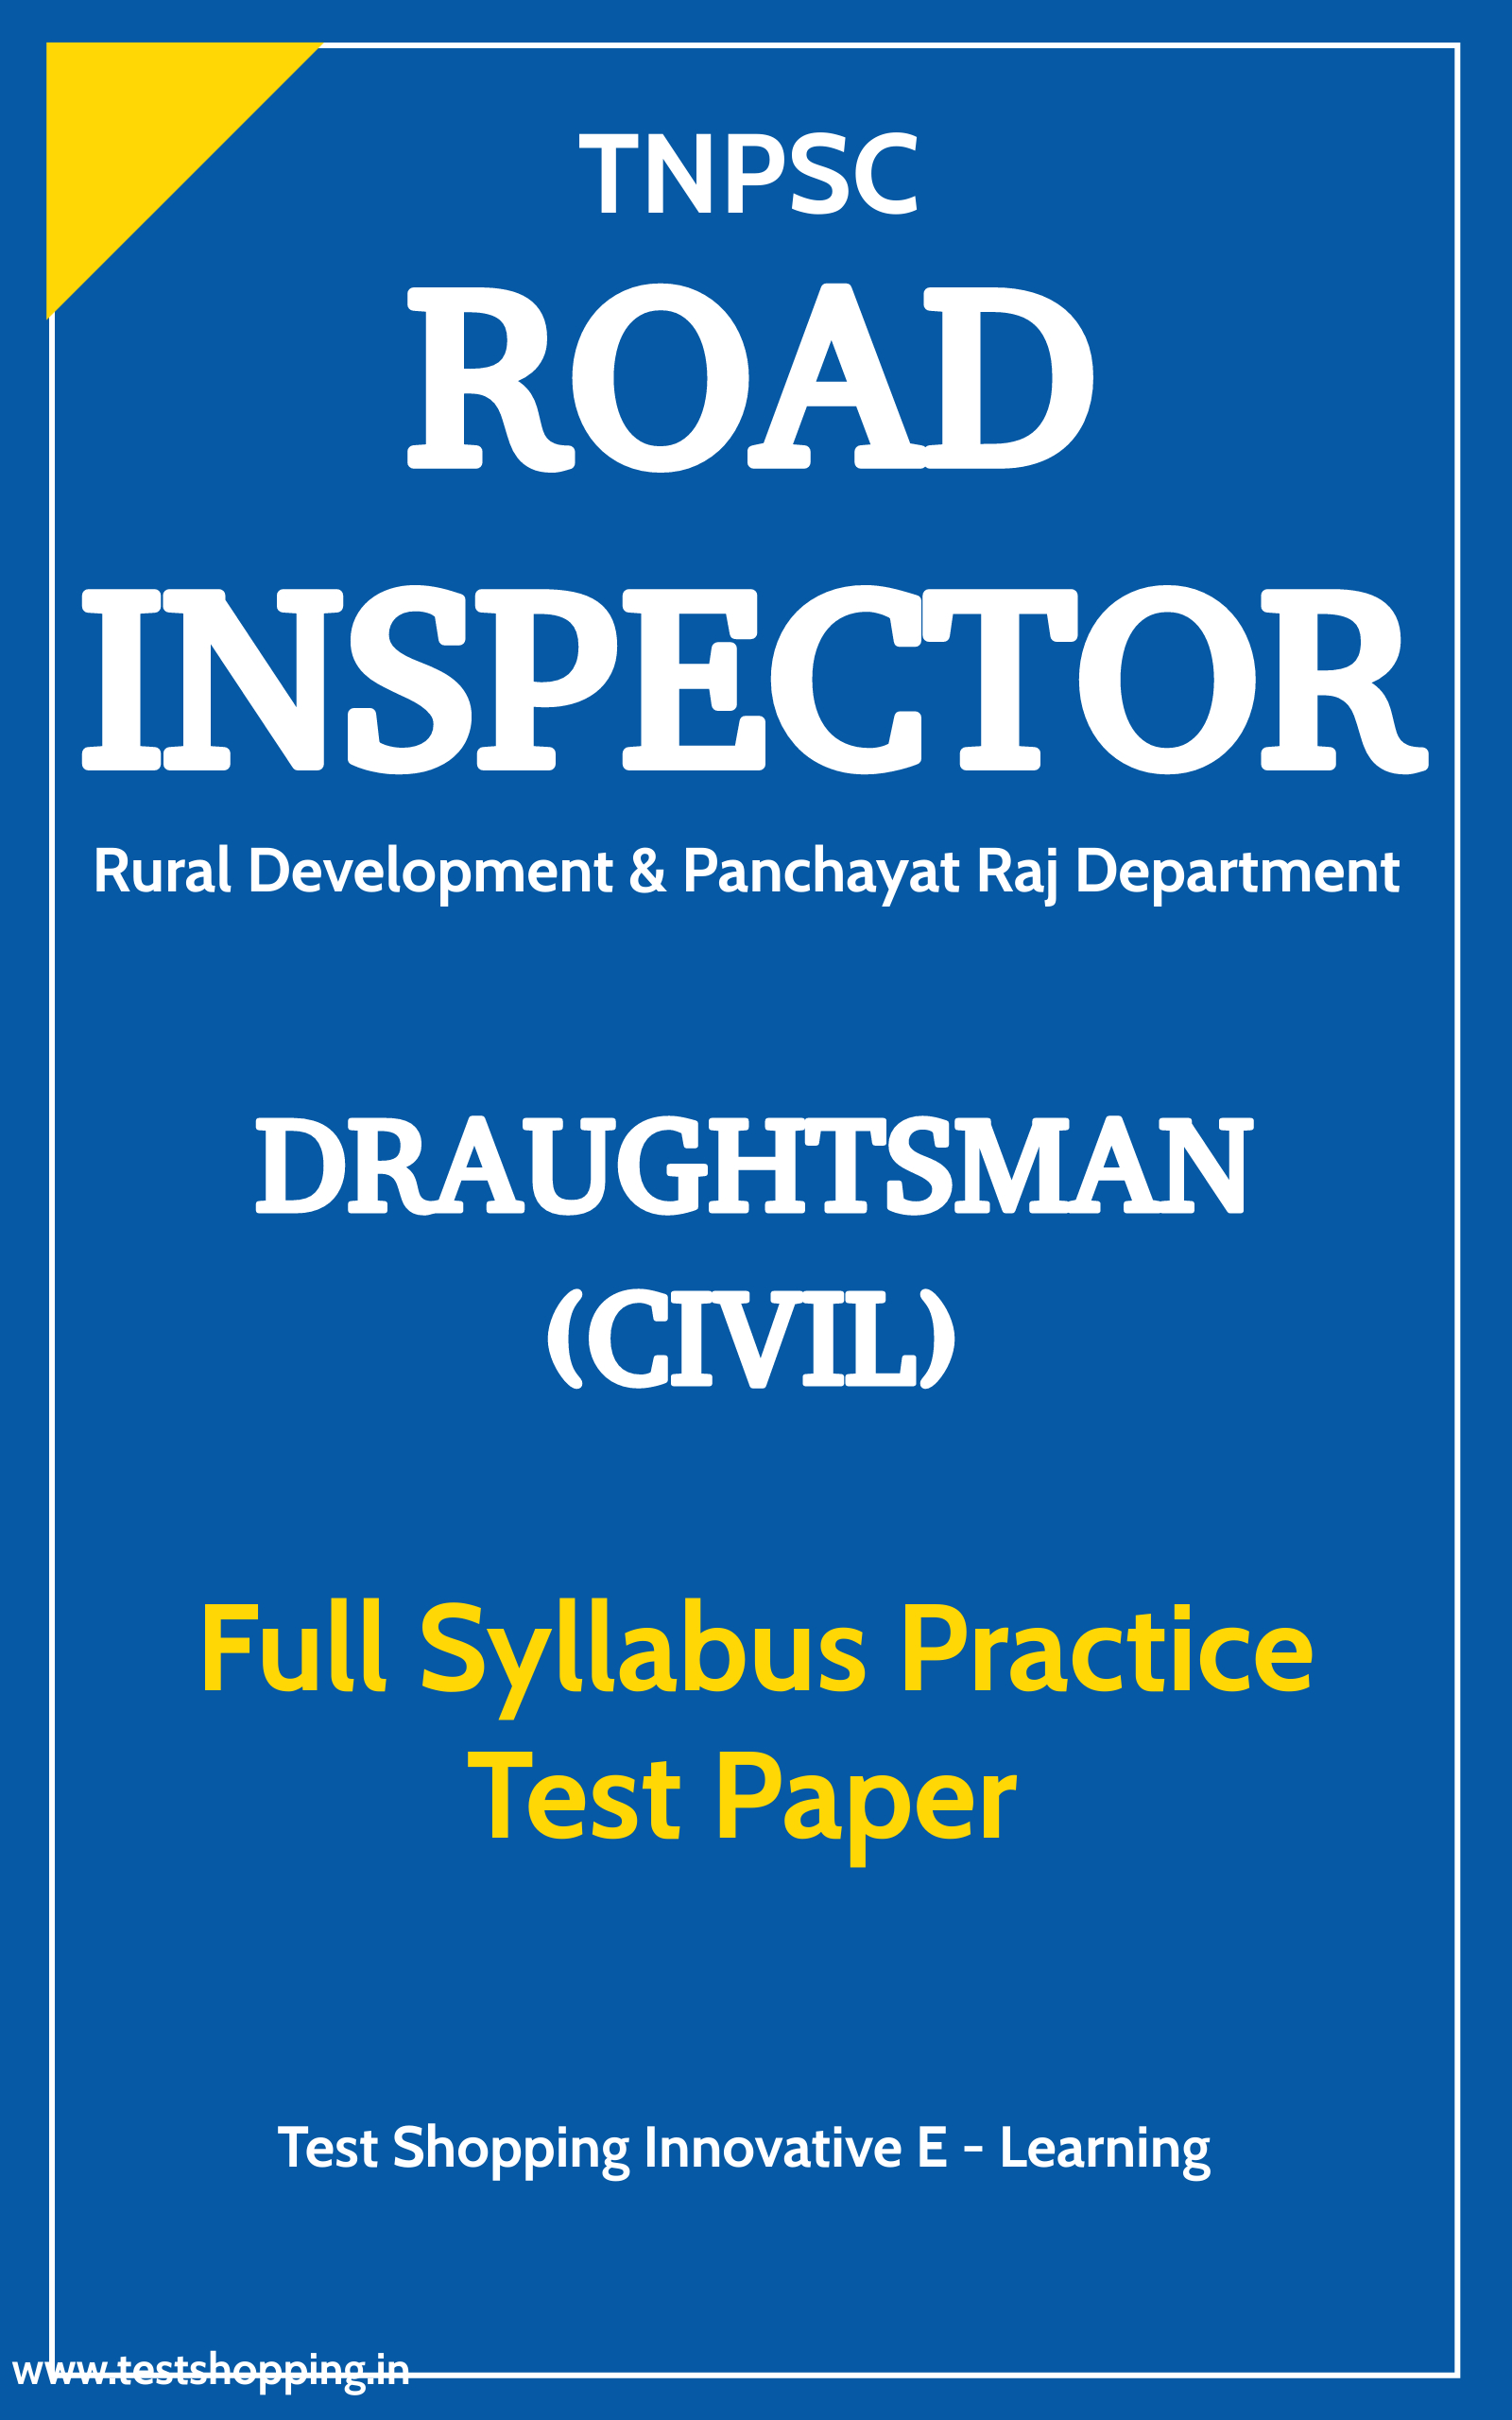 TNPSC Road Inspector Full Length Practice Test Question Paper